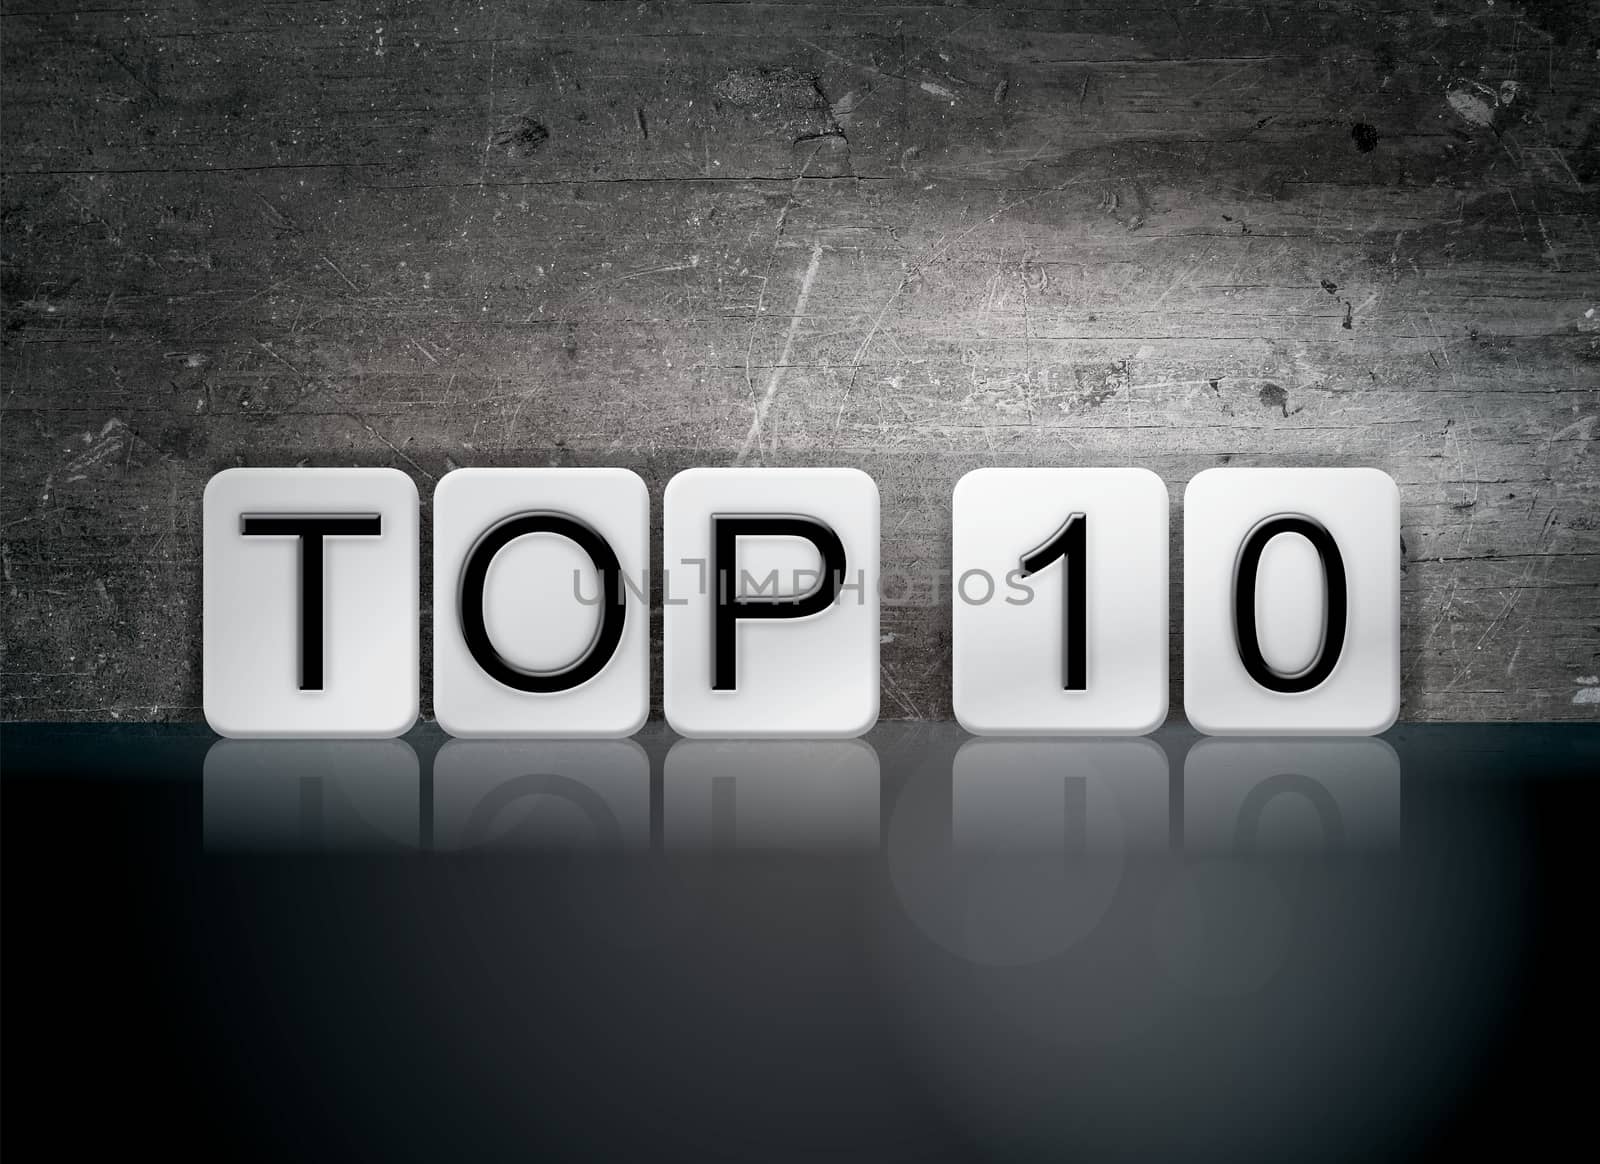 The word "Top 10" written in white tiles against a dark vintage grunge background.